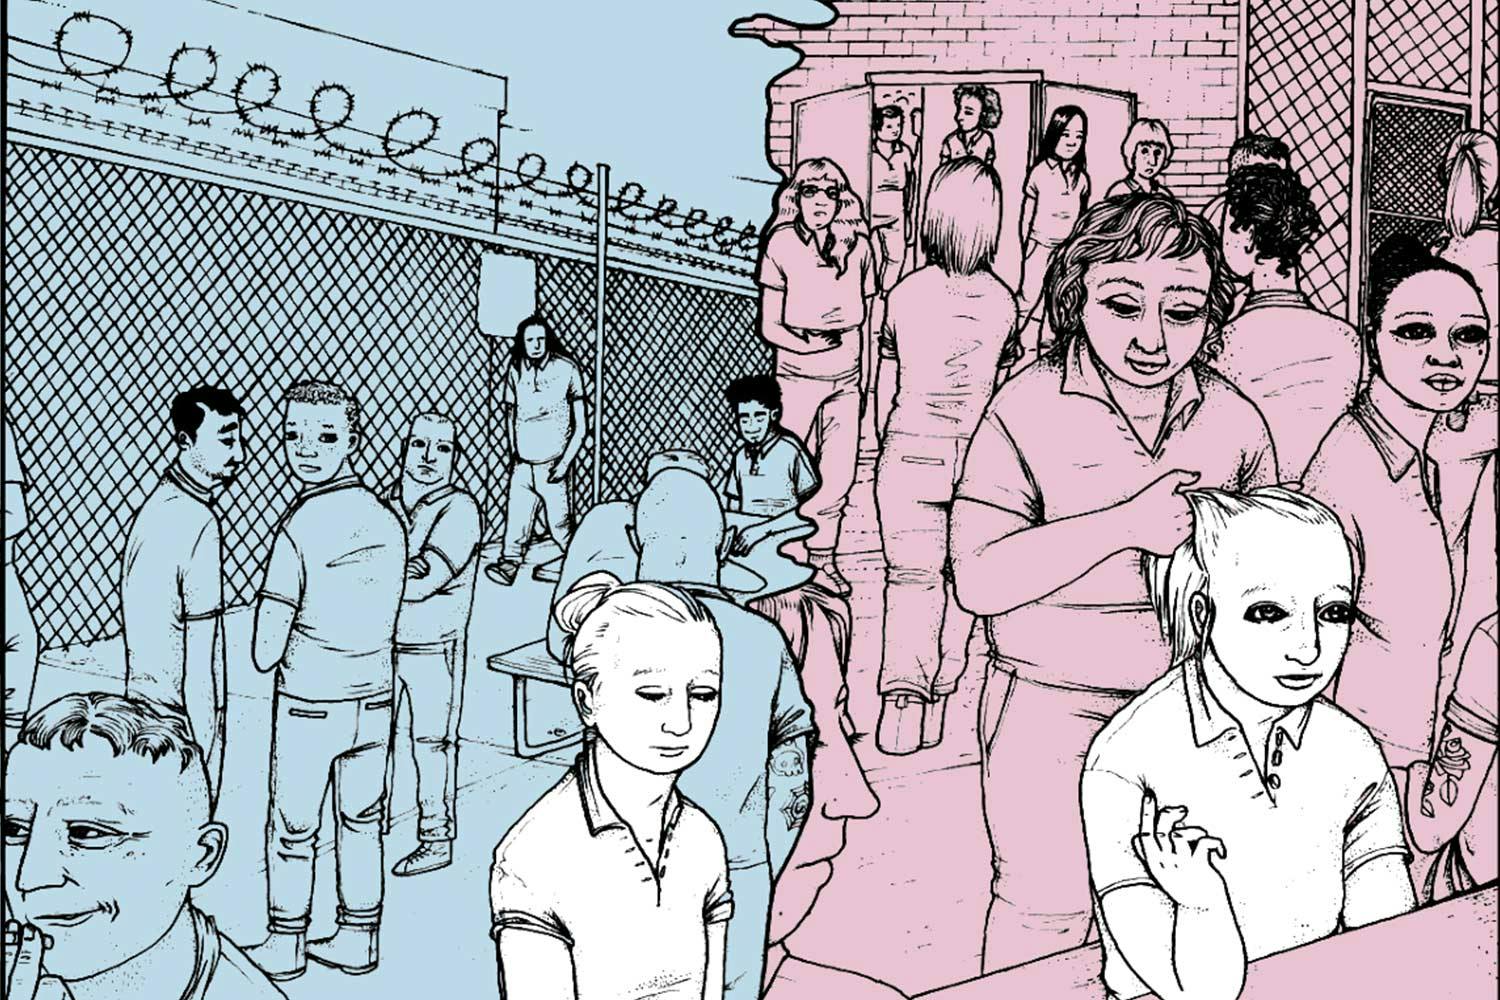 Illustration—a trans prisoner alone in a corner in a men’s prison yard; a woman inmate brainds the trans prisoner’s hair.